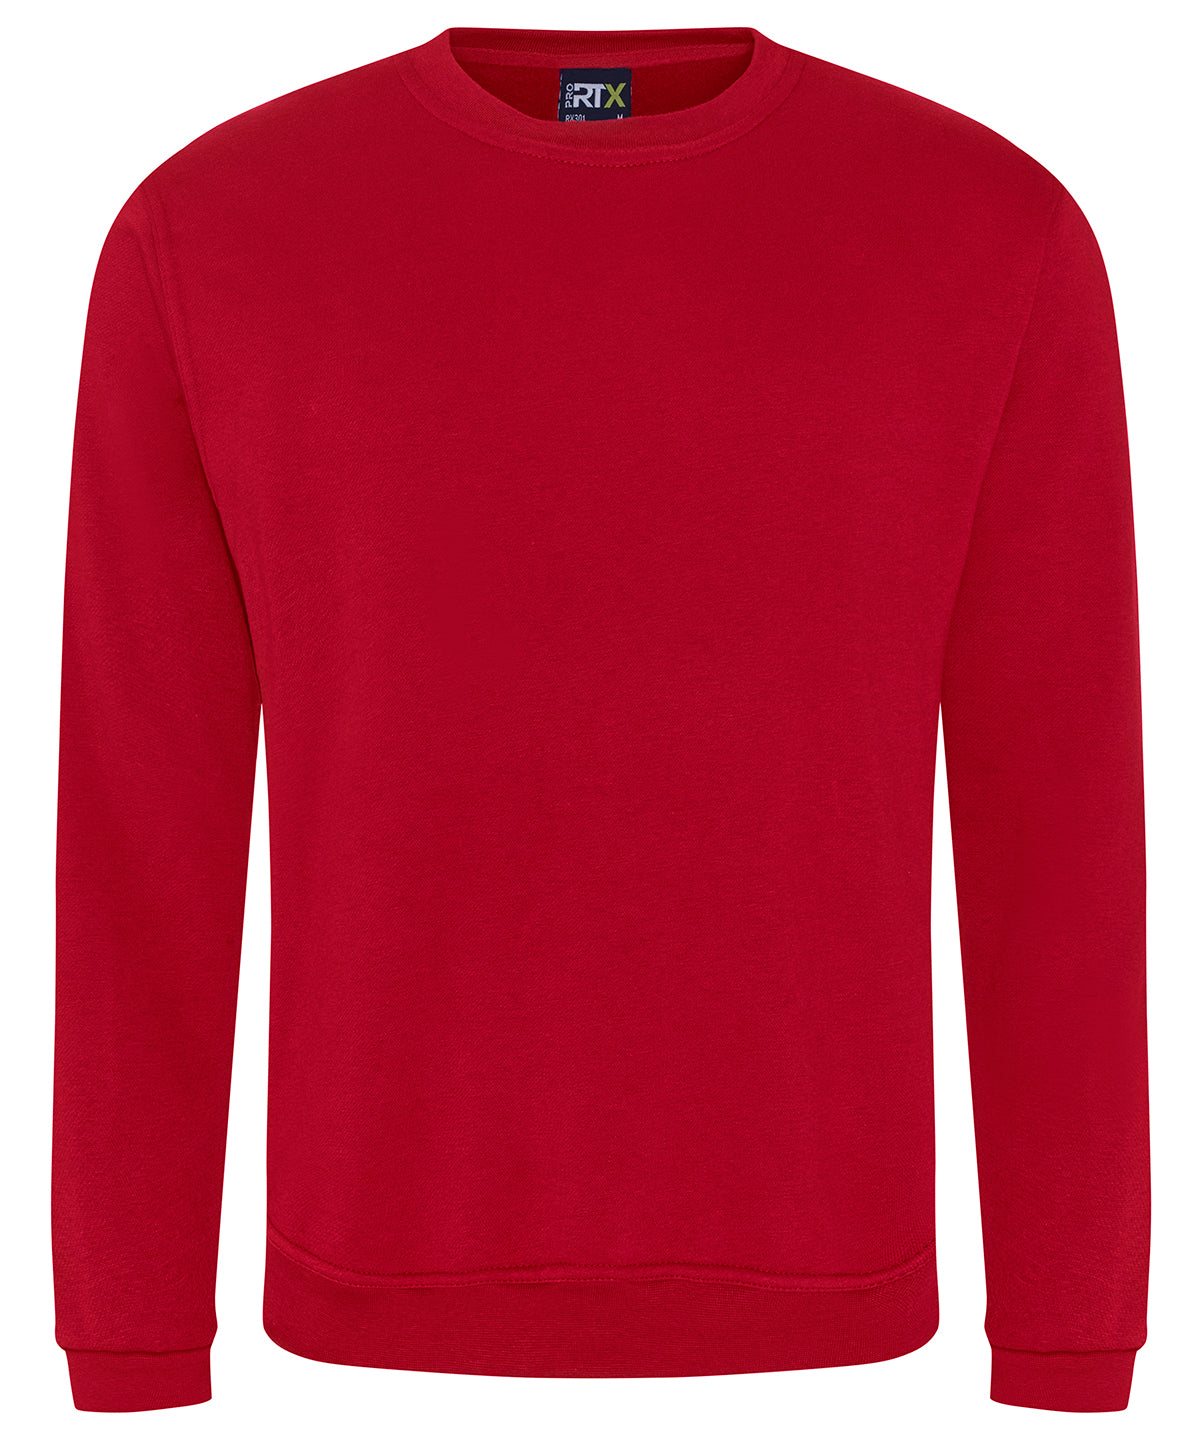 ProRTX Pro sweatshirt Red